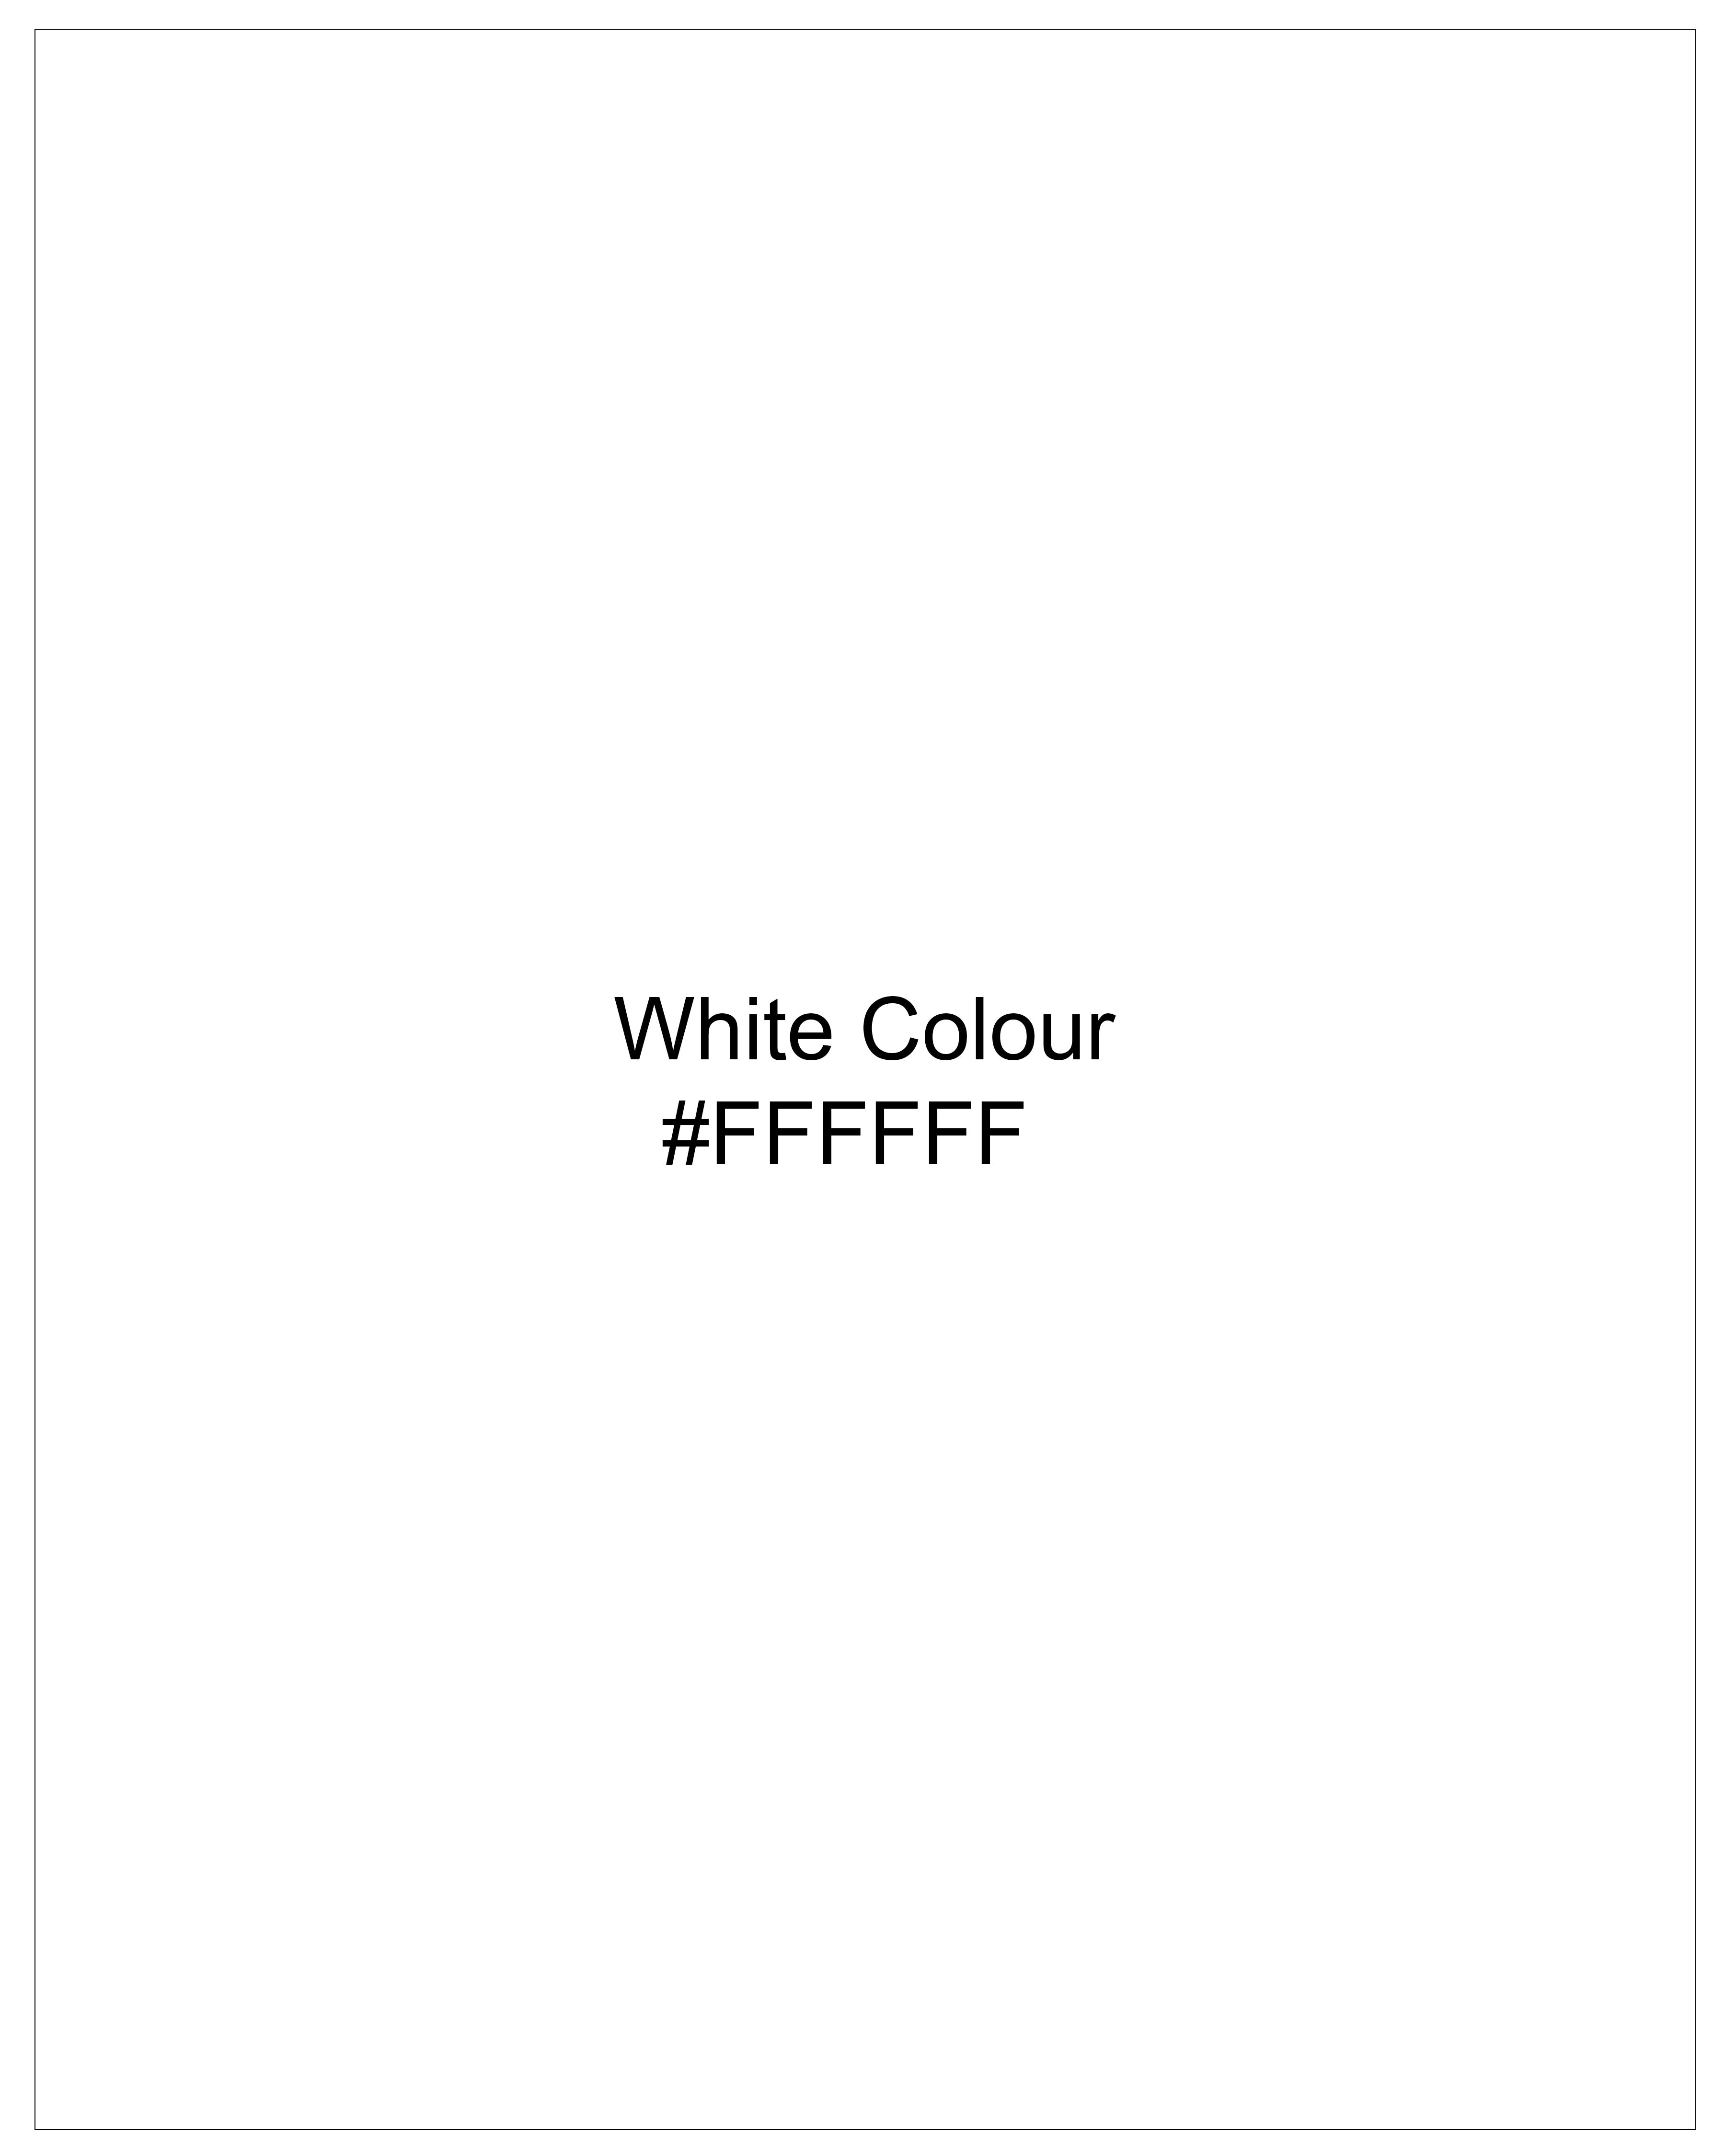 Bright White Royal Oxford Shirt 8988-BLK-38, 8988-BLK-H-38, 8988-BLK-39, 8988-BLK-H-39, 8988-BLK-40, 8988-BLK-H-40, 8988-BLK-42, 8988-BLK-H-42, 8988-BLK-44, 8988-BLK-H-44, 8988-BLK-46, 8988-BLK-H-46, 8988-BLK-48, 8988-BLK-H-48, 8988-BLK-50, 8988-BLK-H-50, 8988-BLK-52, 8988-BLK-H-52